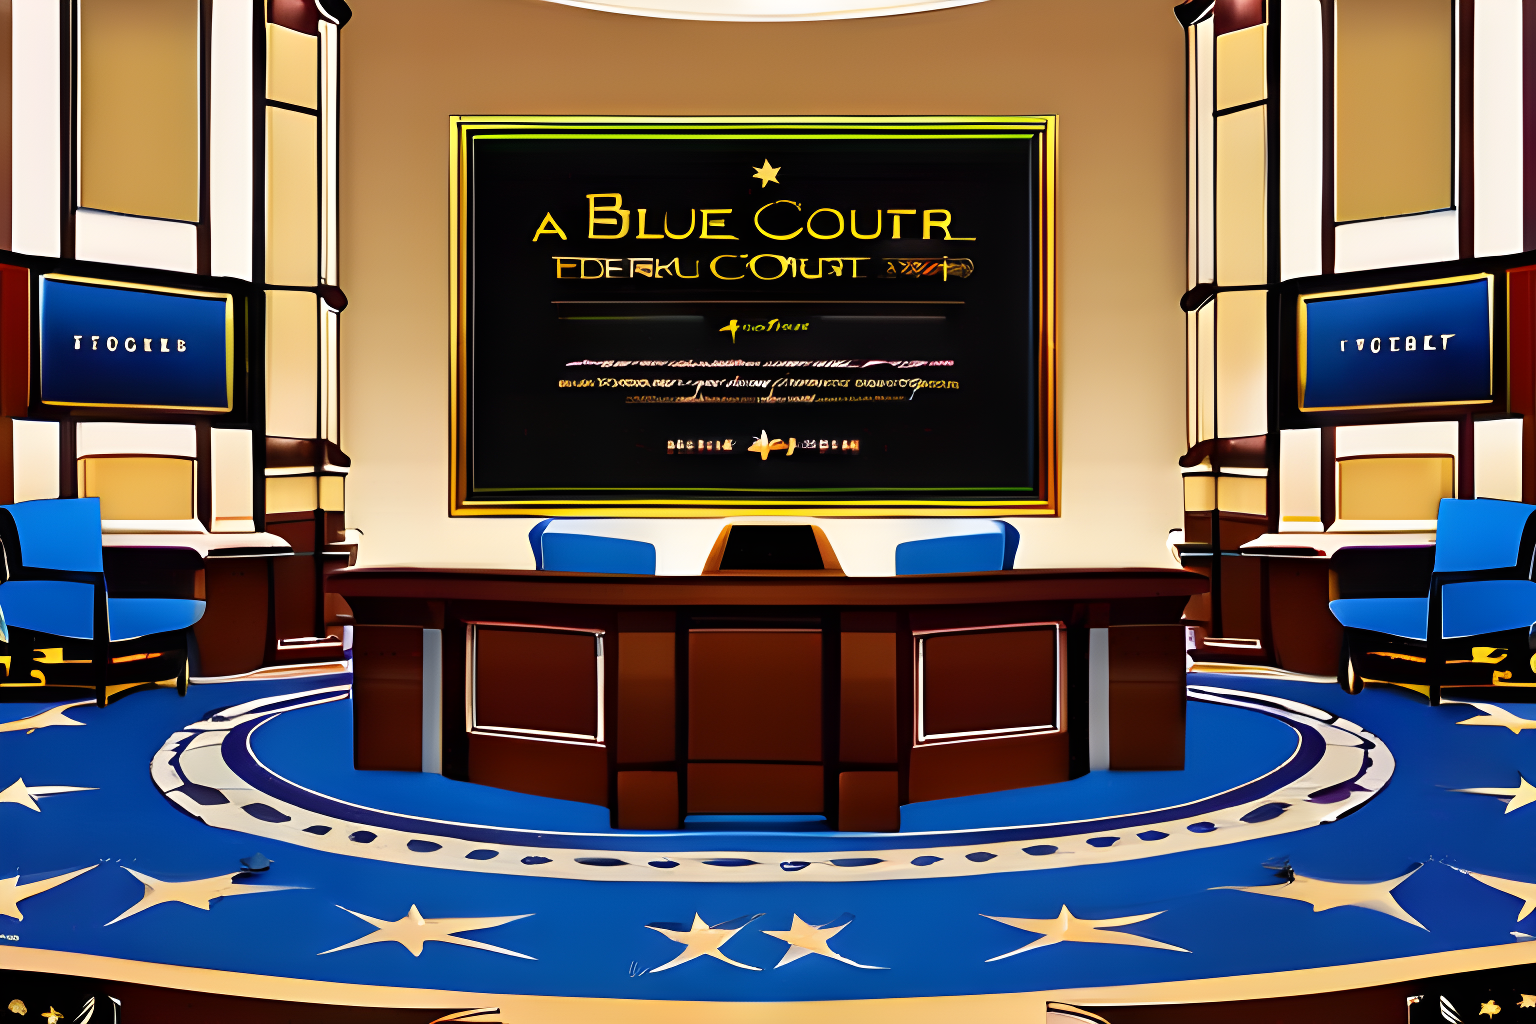 a blue federal court